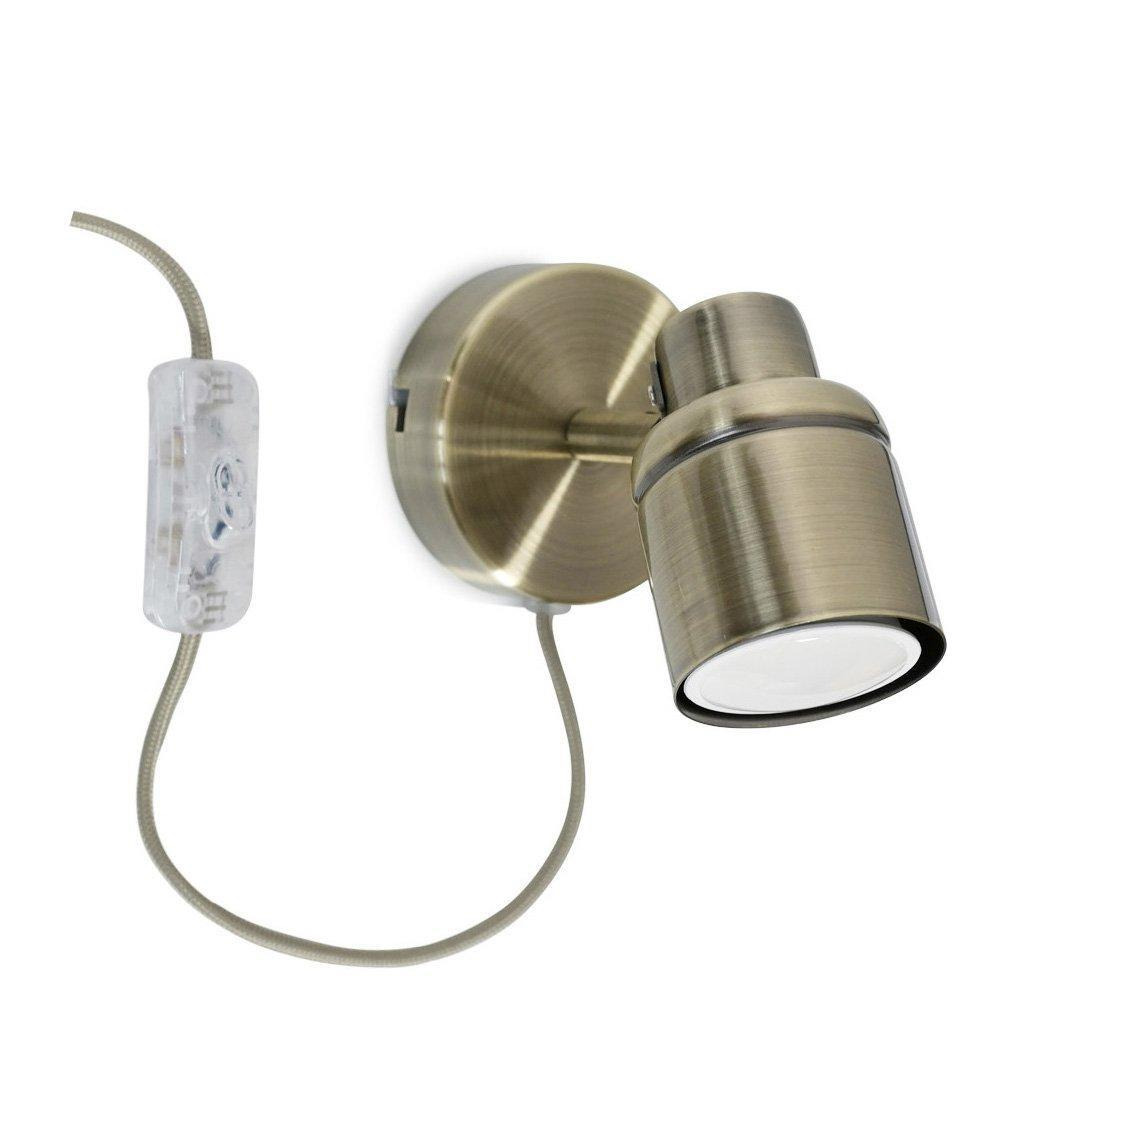 Benton Gold IP44 Wall Light With Cable Plug - image 1